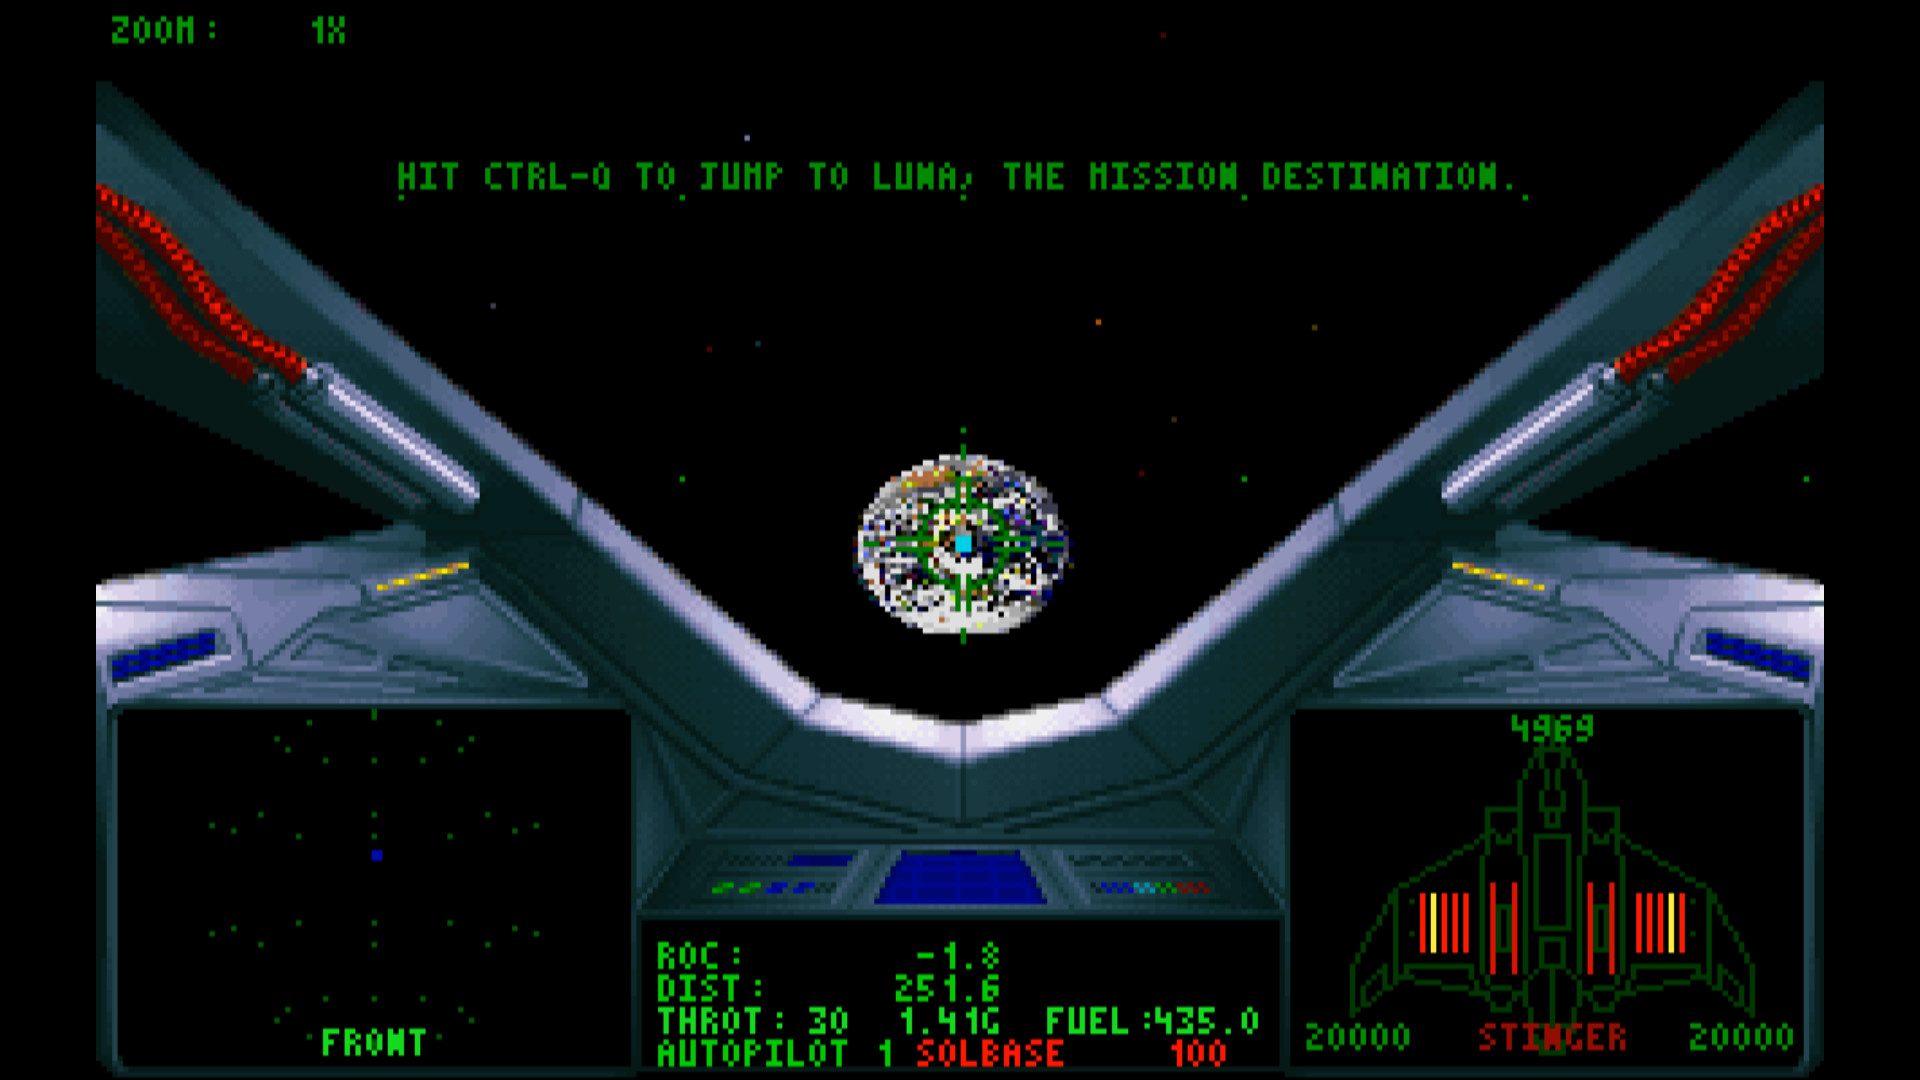 XF5700 Mantis Experimental Fighter screenshot